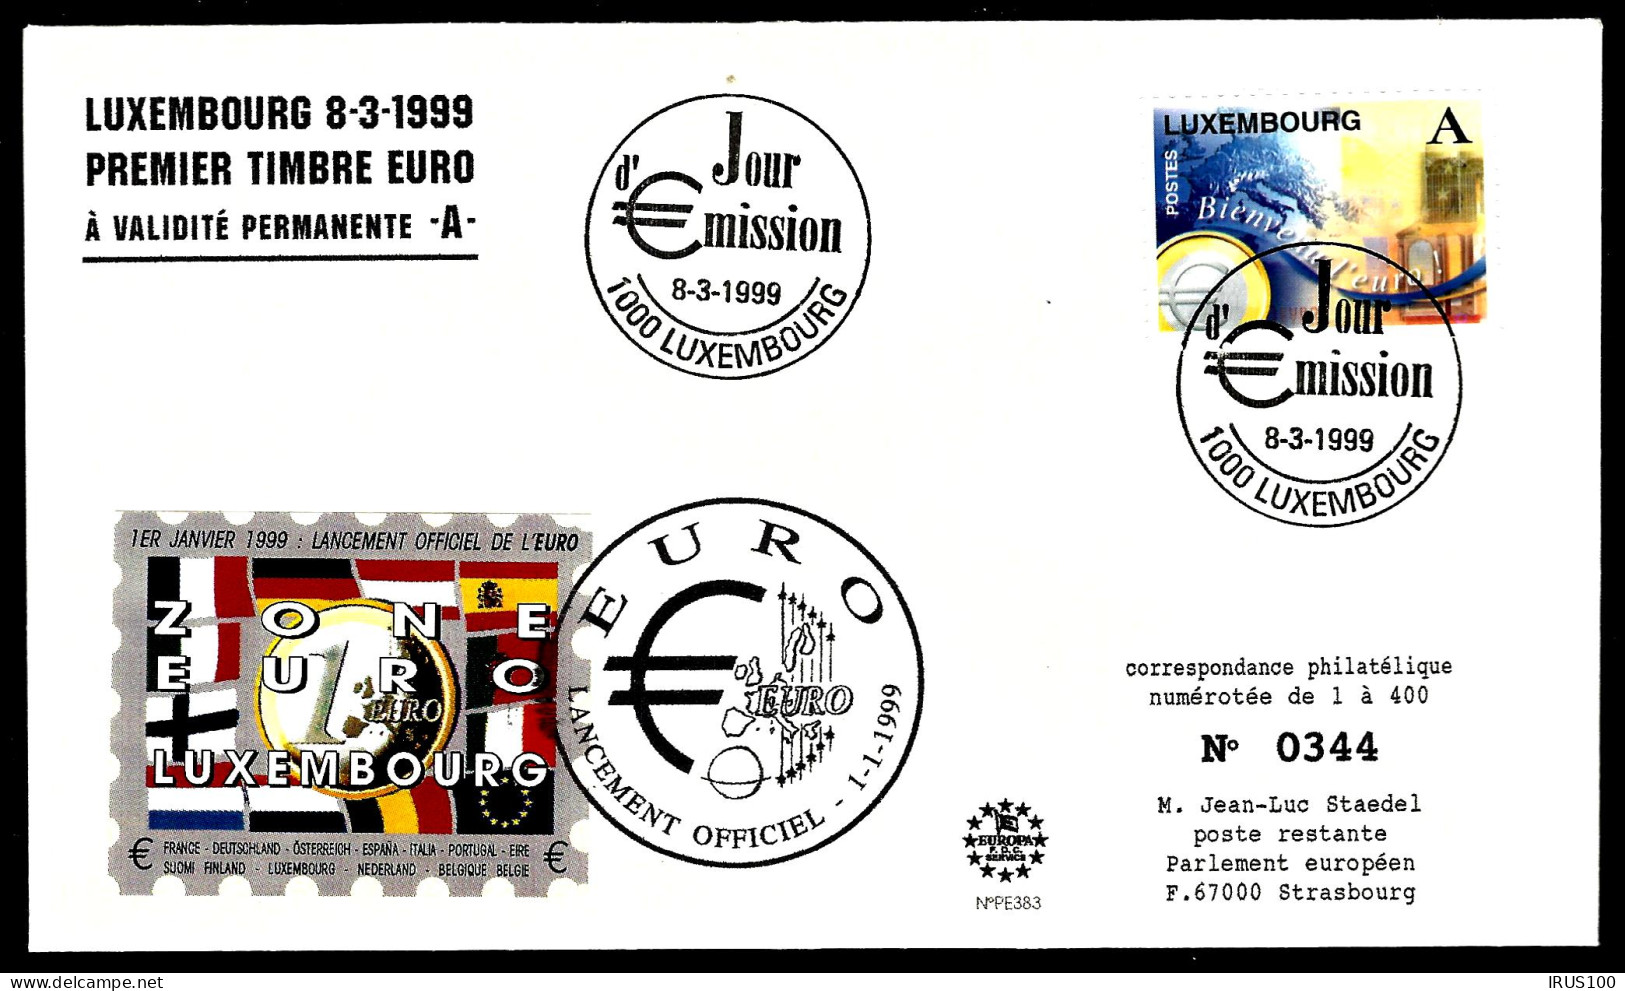 LUXEMBOURG - ZONE EURO - LANCEMENT OFFICIEL - TIRAGE: 344/400 - Briefe U. Dokumente